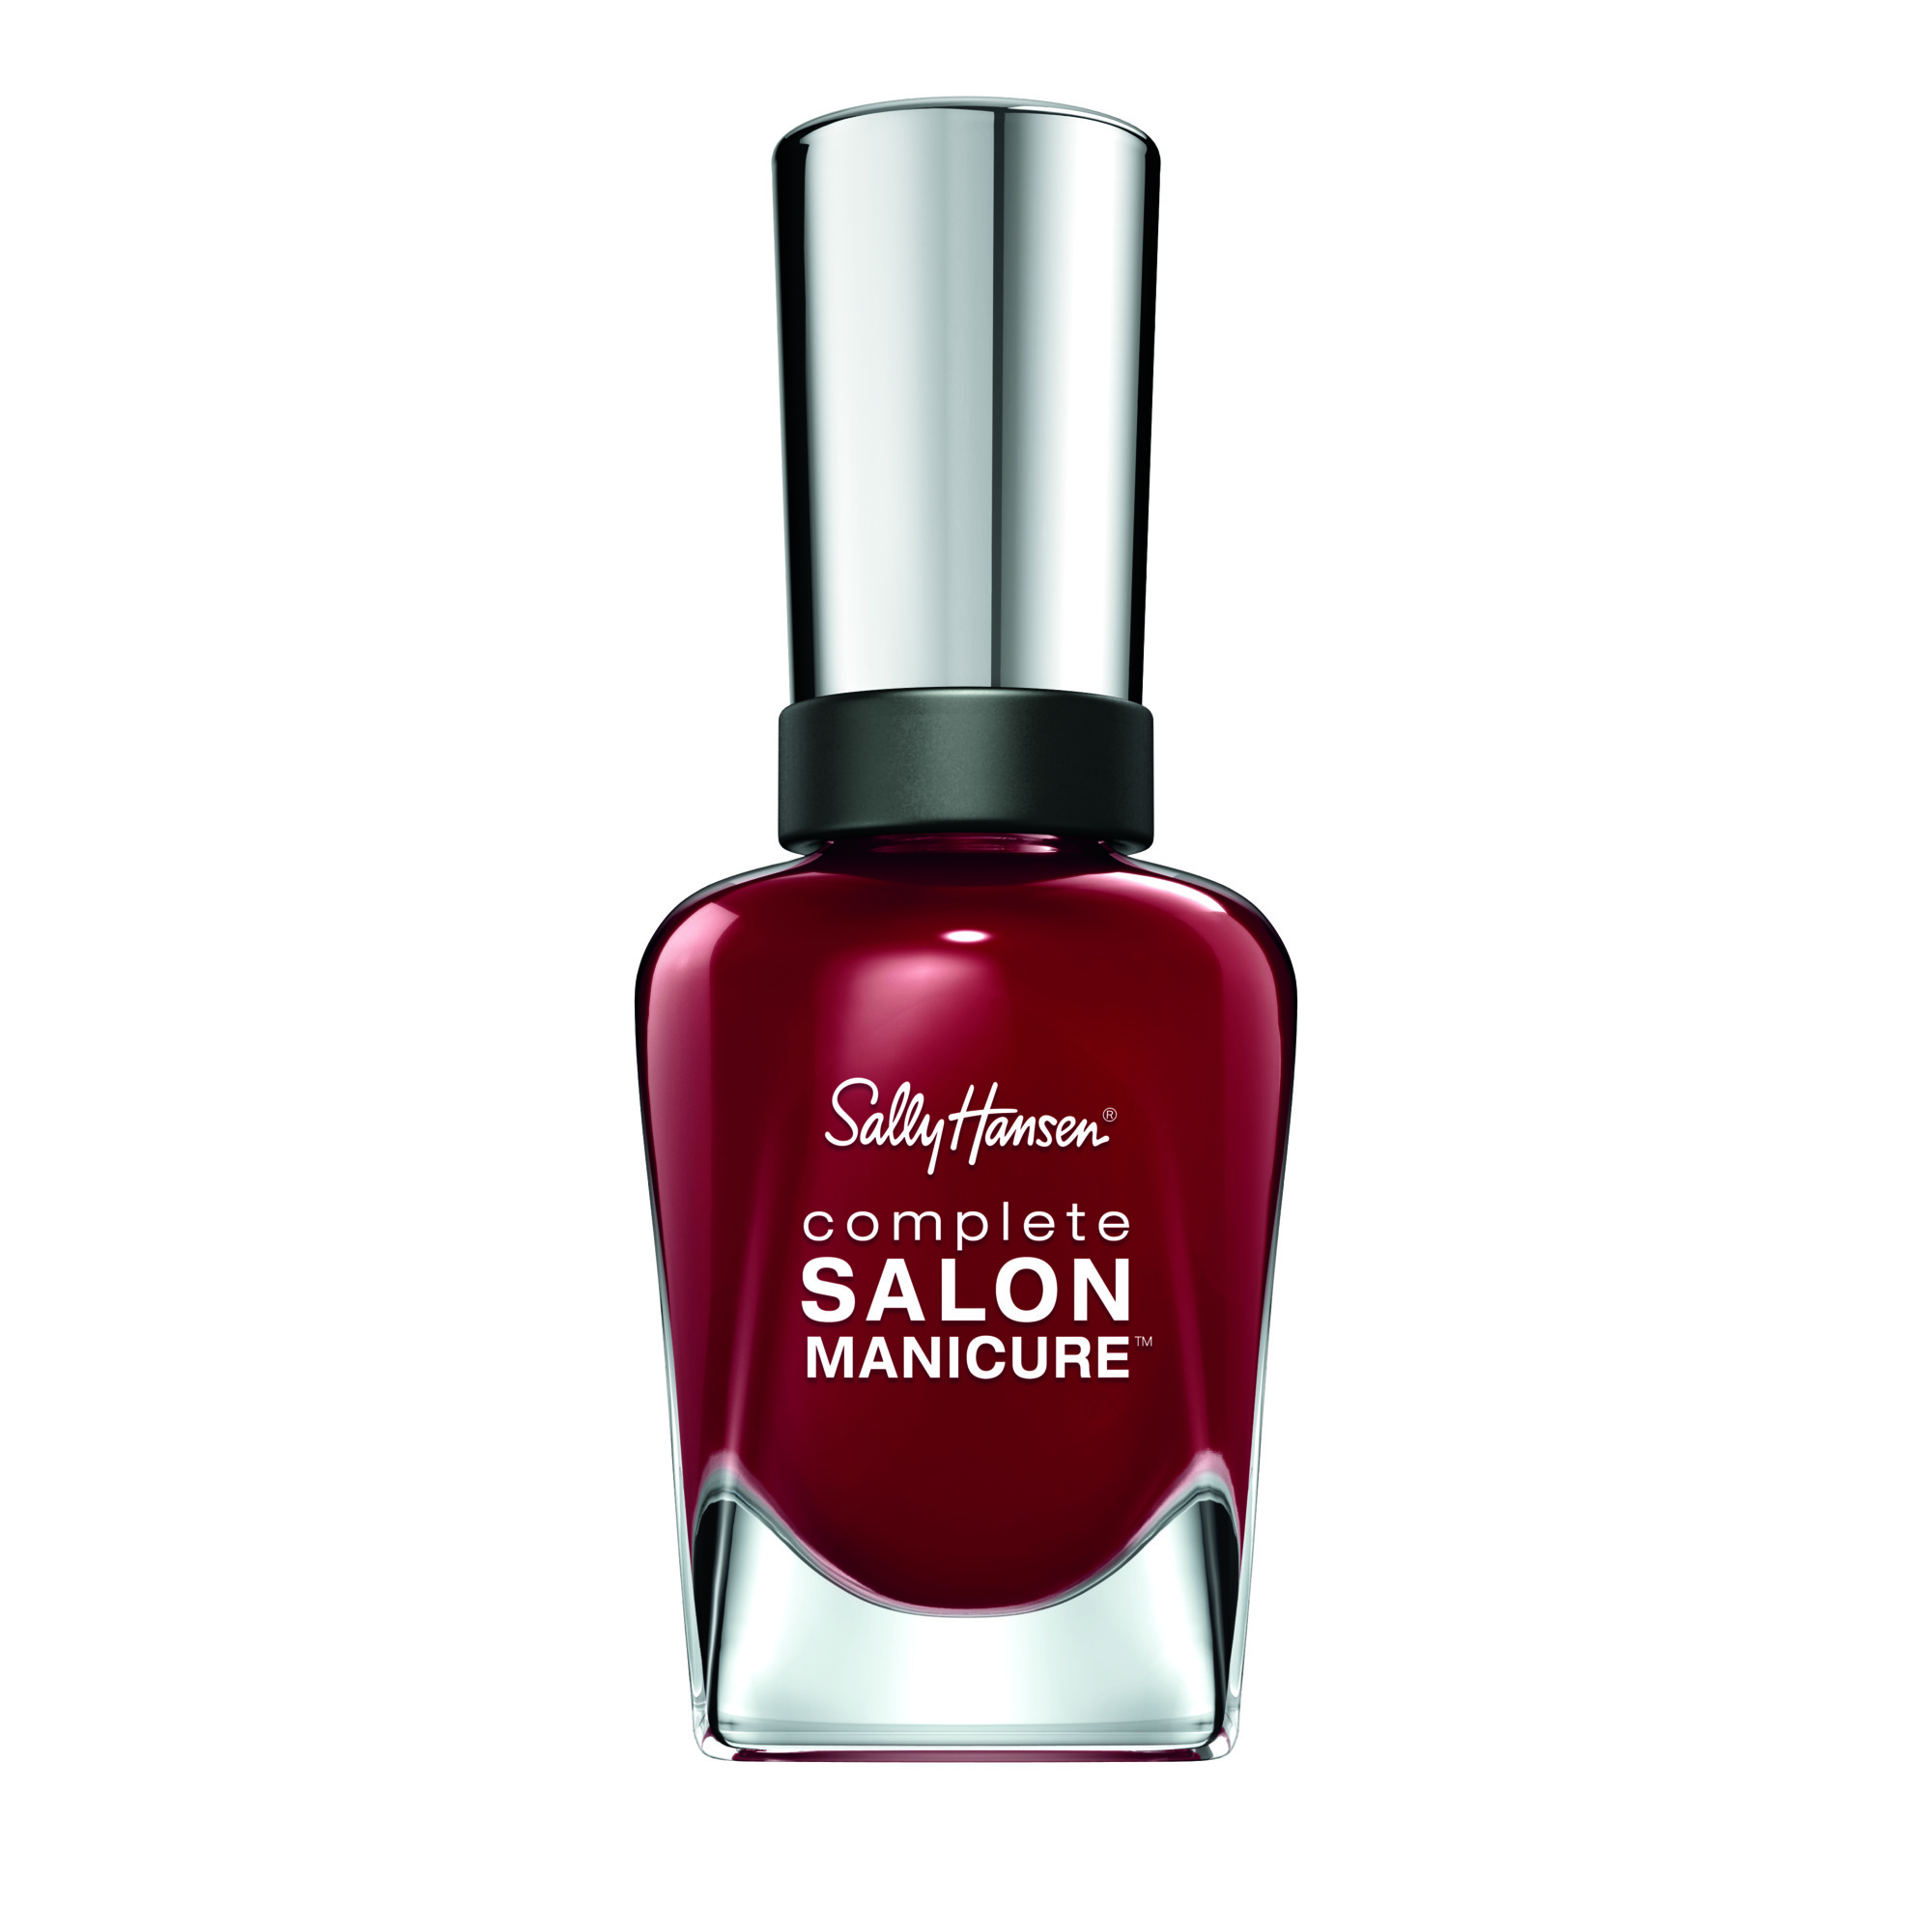 Sally Hansen Complete Salon Manicure Nail Polish, Red Zin - image 1 of 2